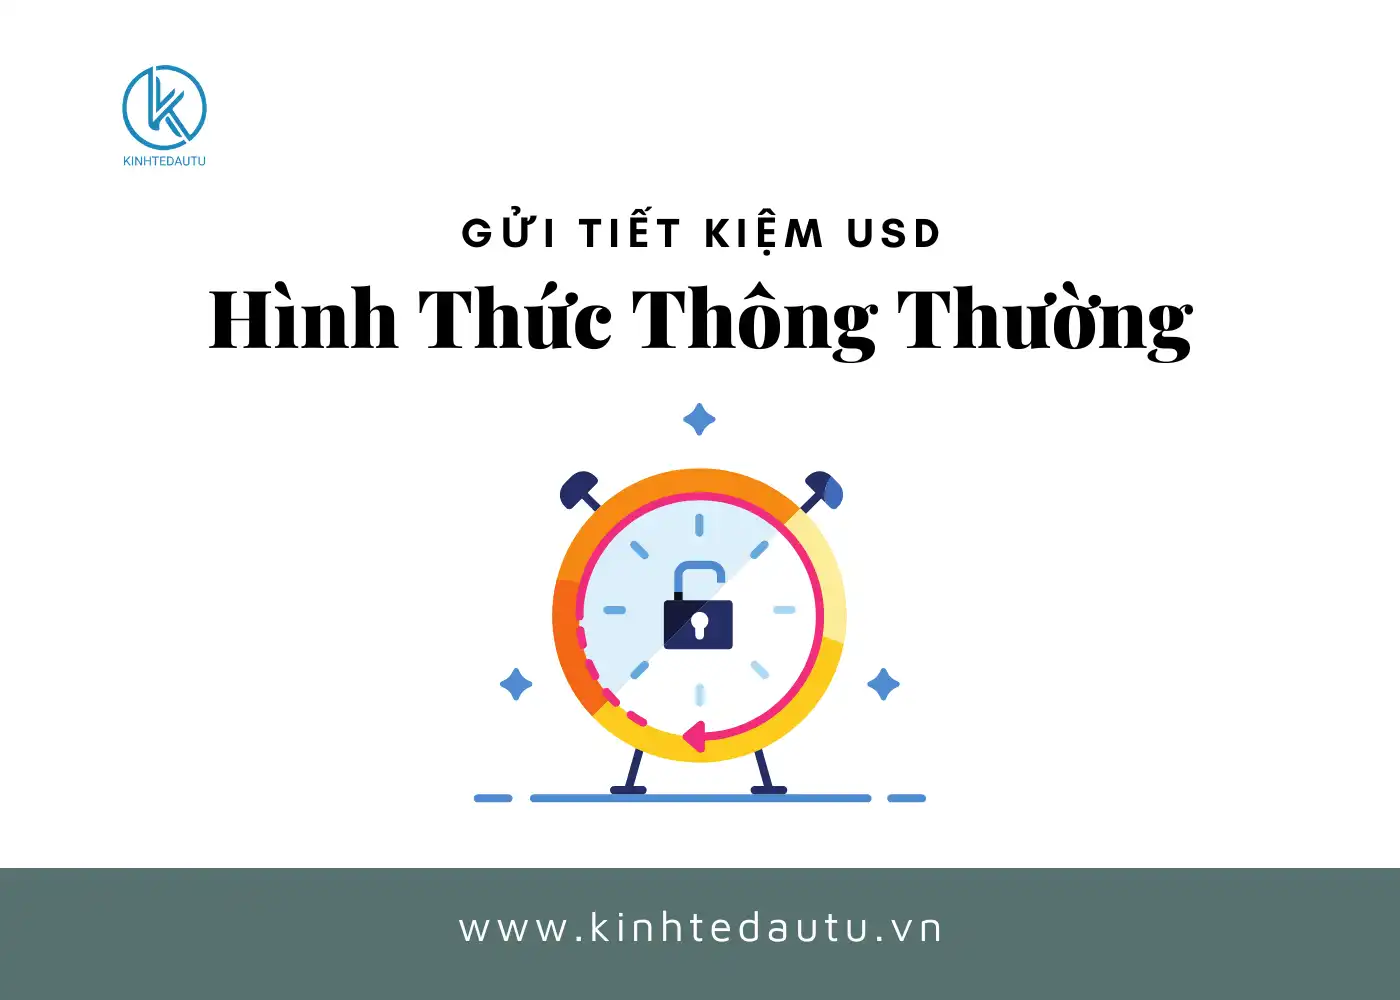 Gui-tiet-kiem-USD-theo-hinh-thuc-thong-thuong.png